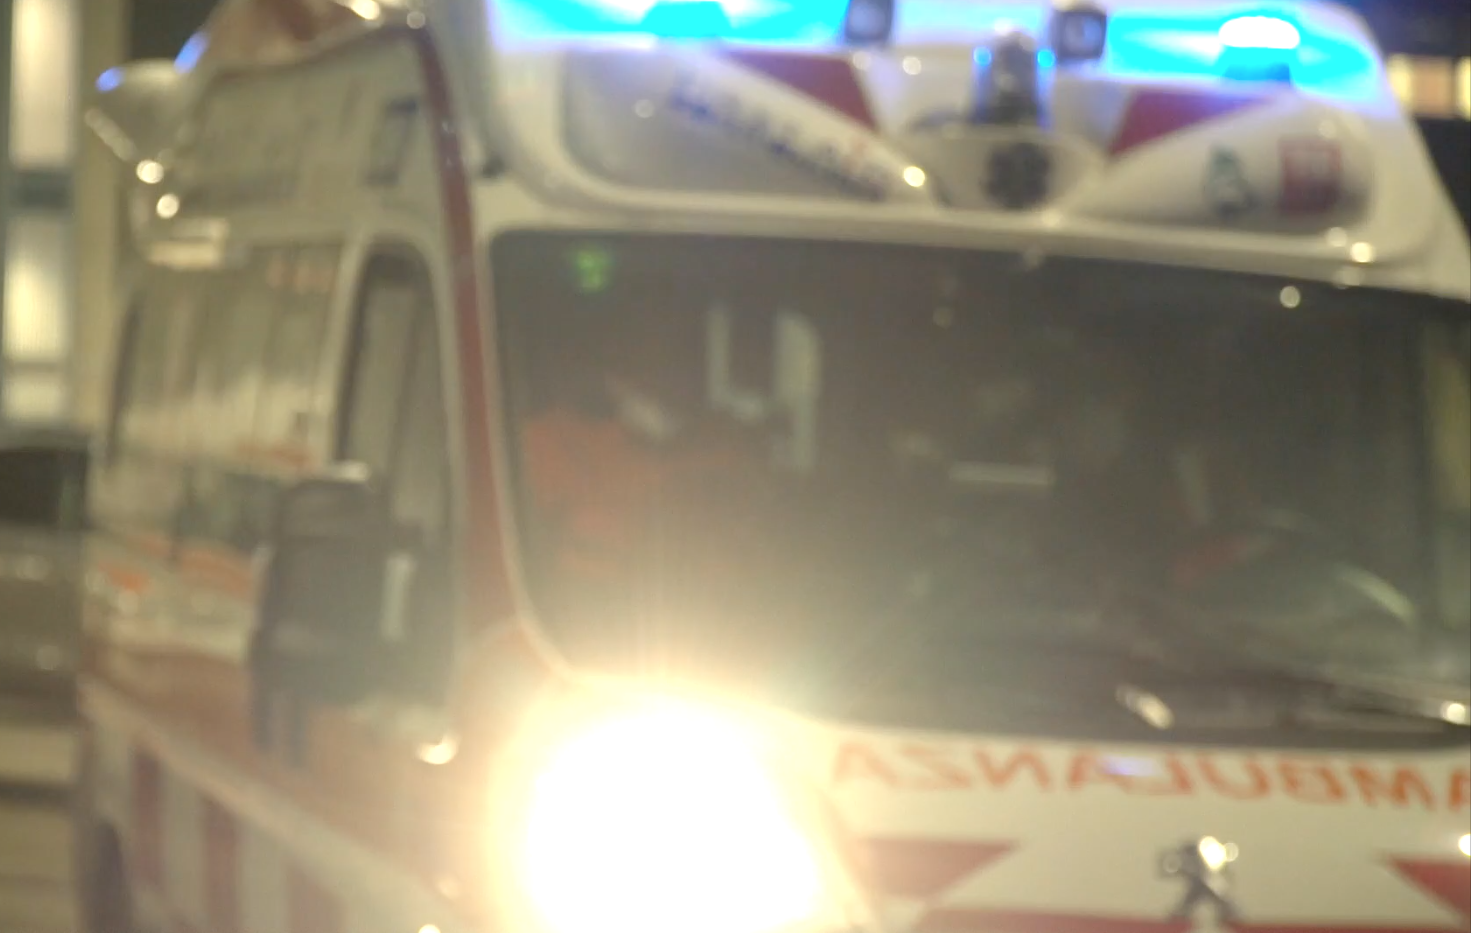 Ambulanza di notte